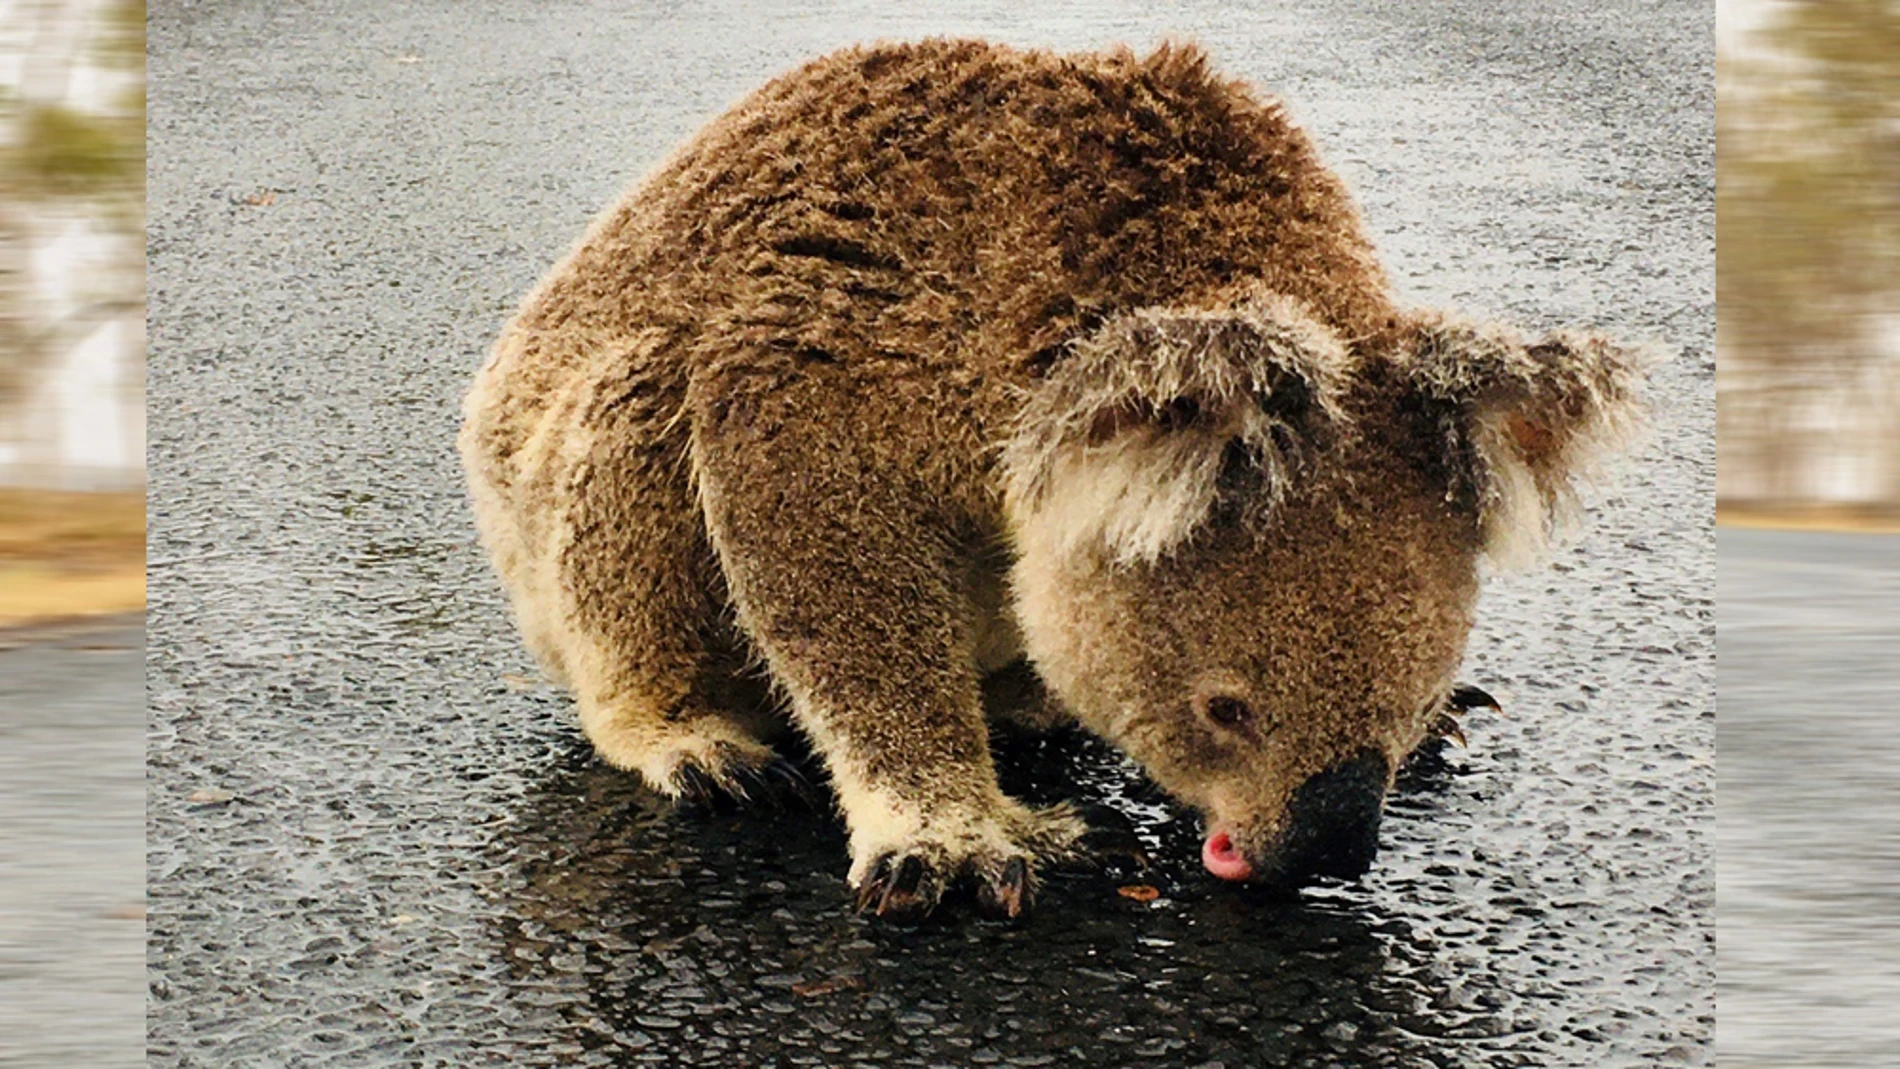 Imagen de un koala bebiendo agua en una carretera en Australia